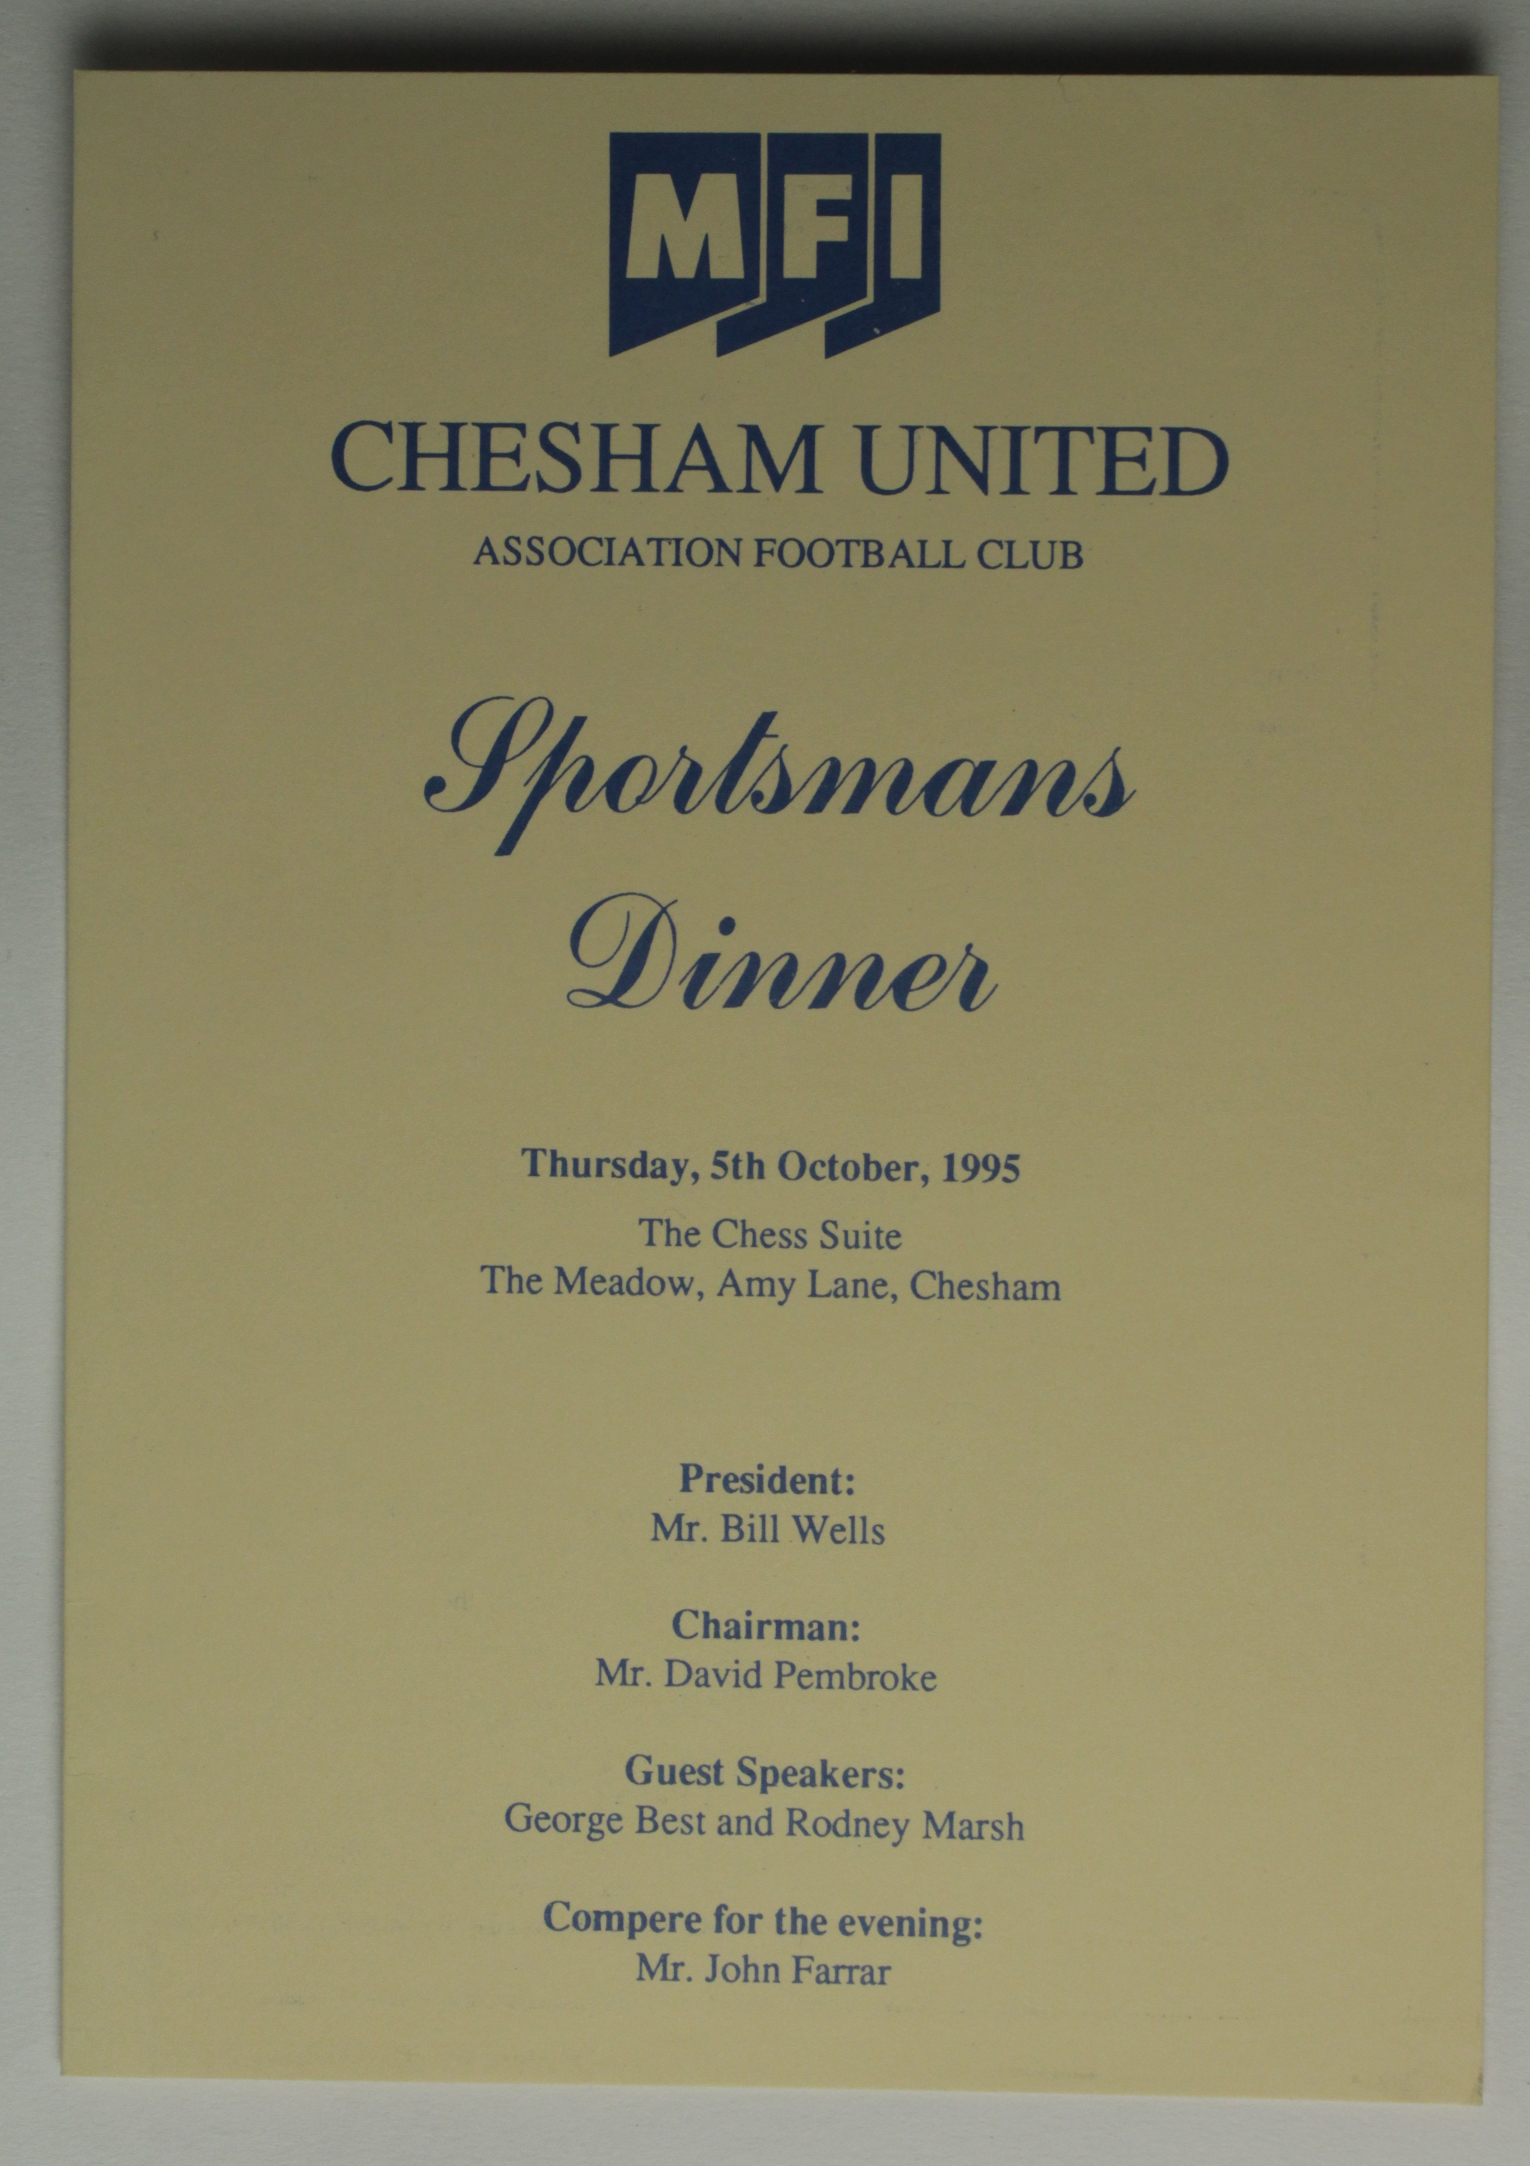 Chesham United Football Club Sportsman's Dinner on 5/10/1995. The guest speakers were George Best